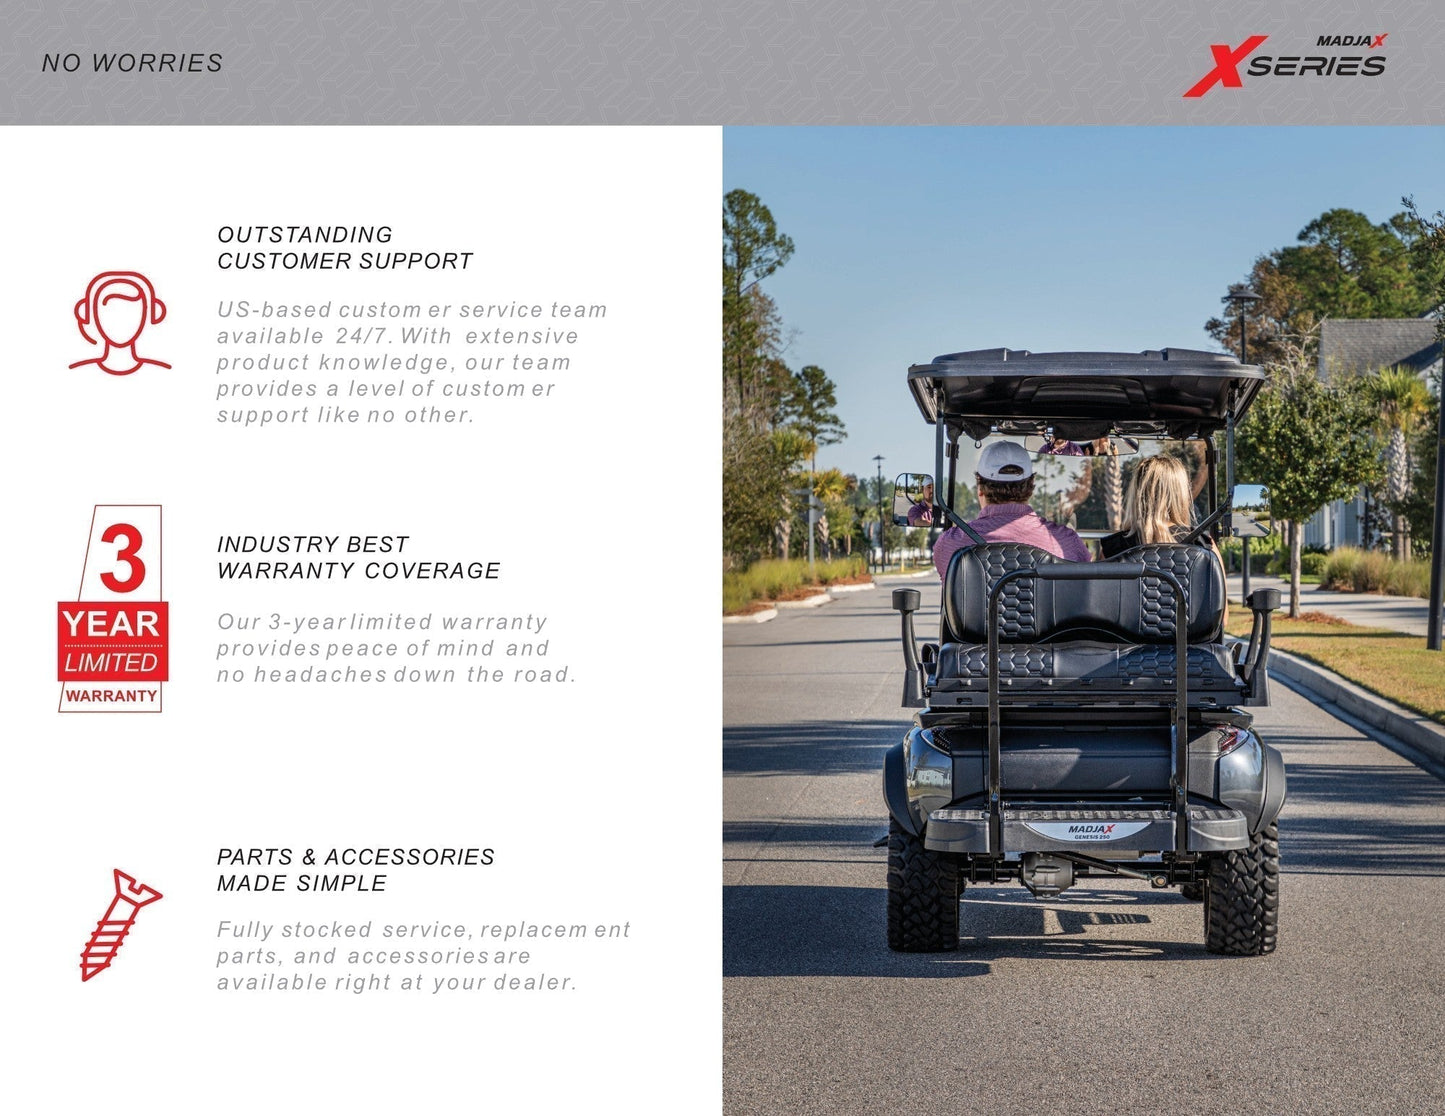 2023 MADJAX X Series Storm Lifted Lithium 4 Passenger Golf Cart - Cherry Metallic #1086 *SOLD*